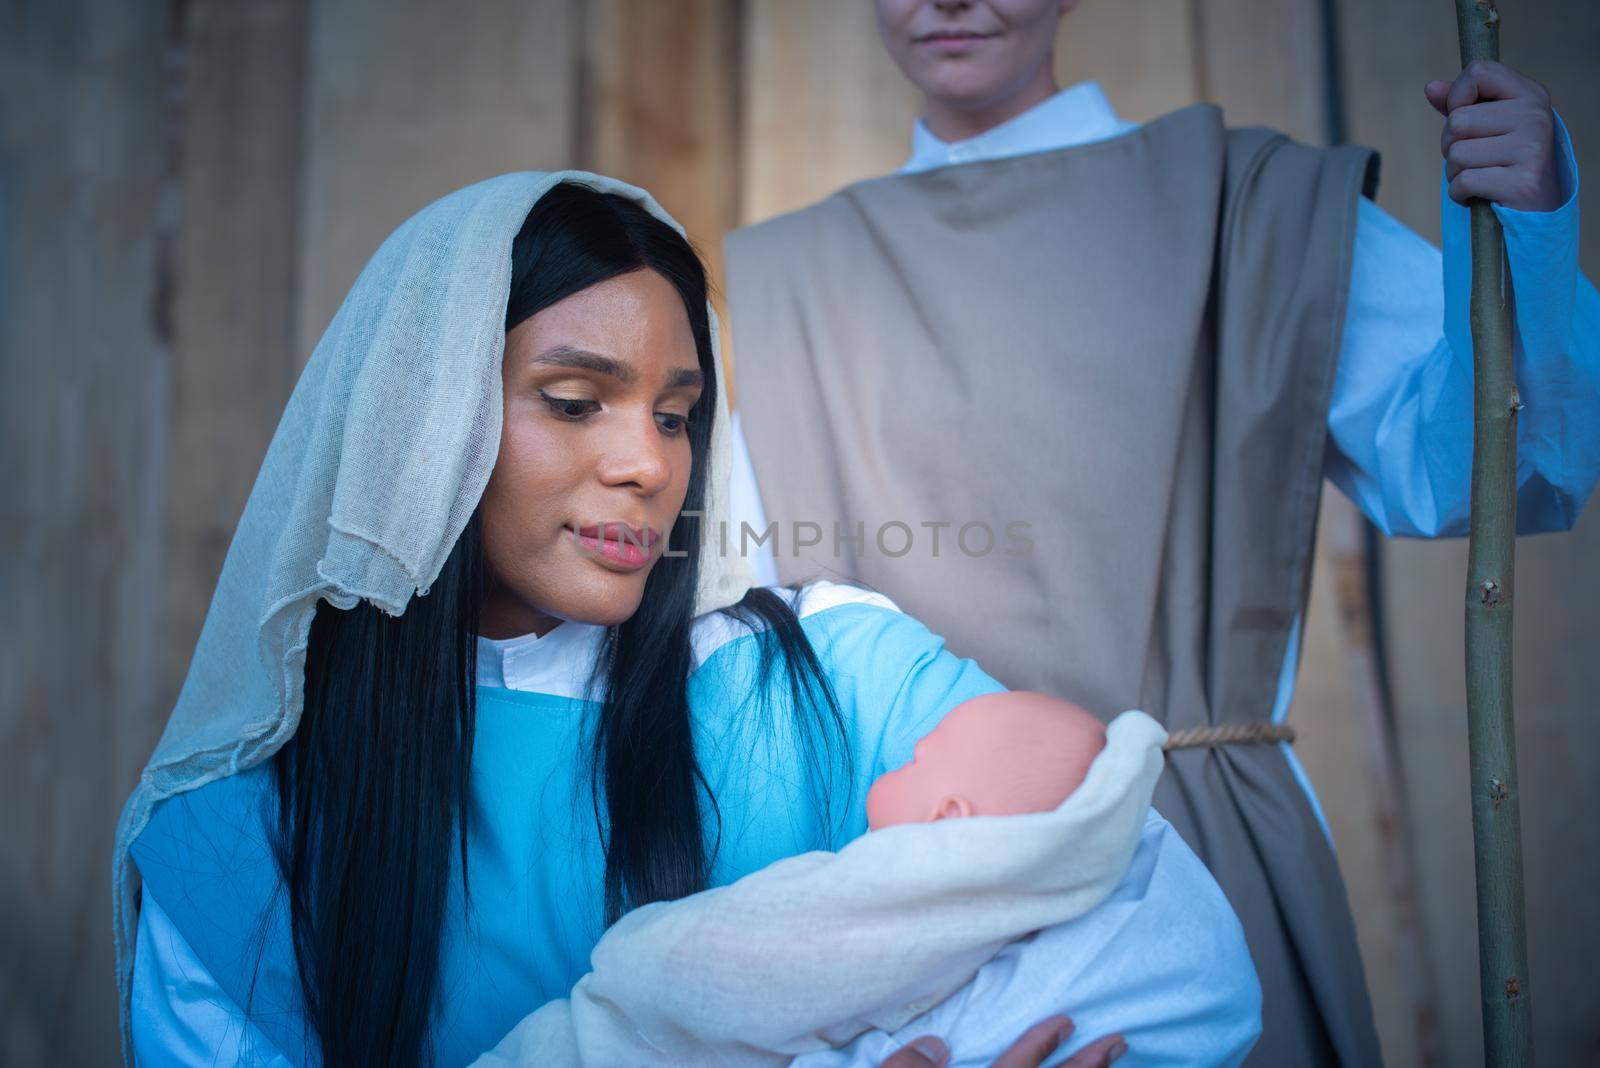 Transgender woman representing Virgin Mary embracing Jesus baby by ivanmoreno